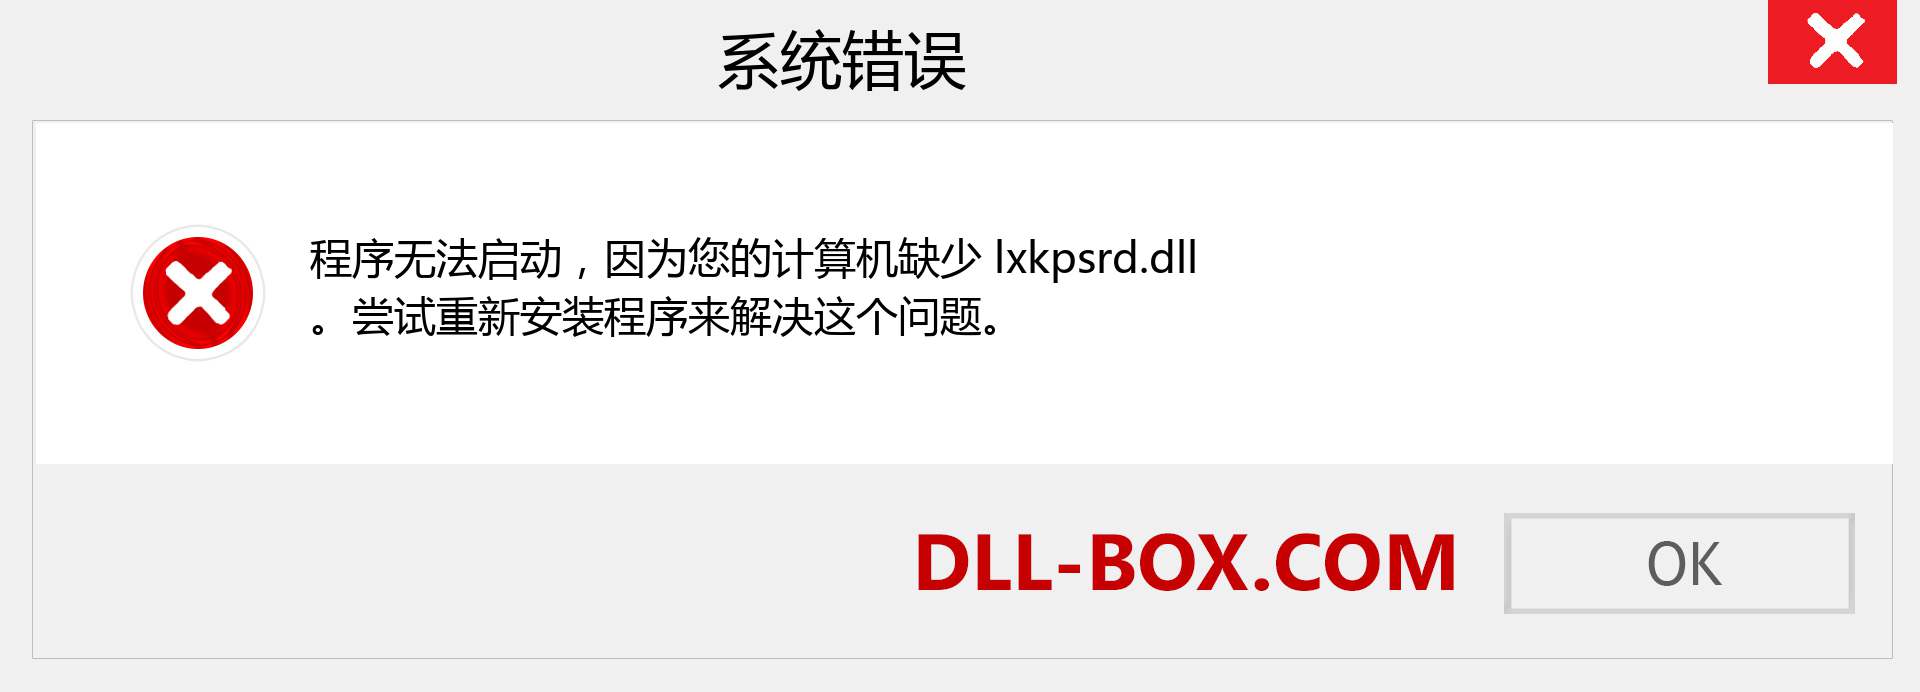 lxkpsrd.dll 文件丢失？。 适用于 Windows 7、8、10 的下载 - 修复 Windows、照片、图像上的 lxkpsrd dll 丢失错误